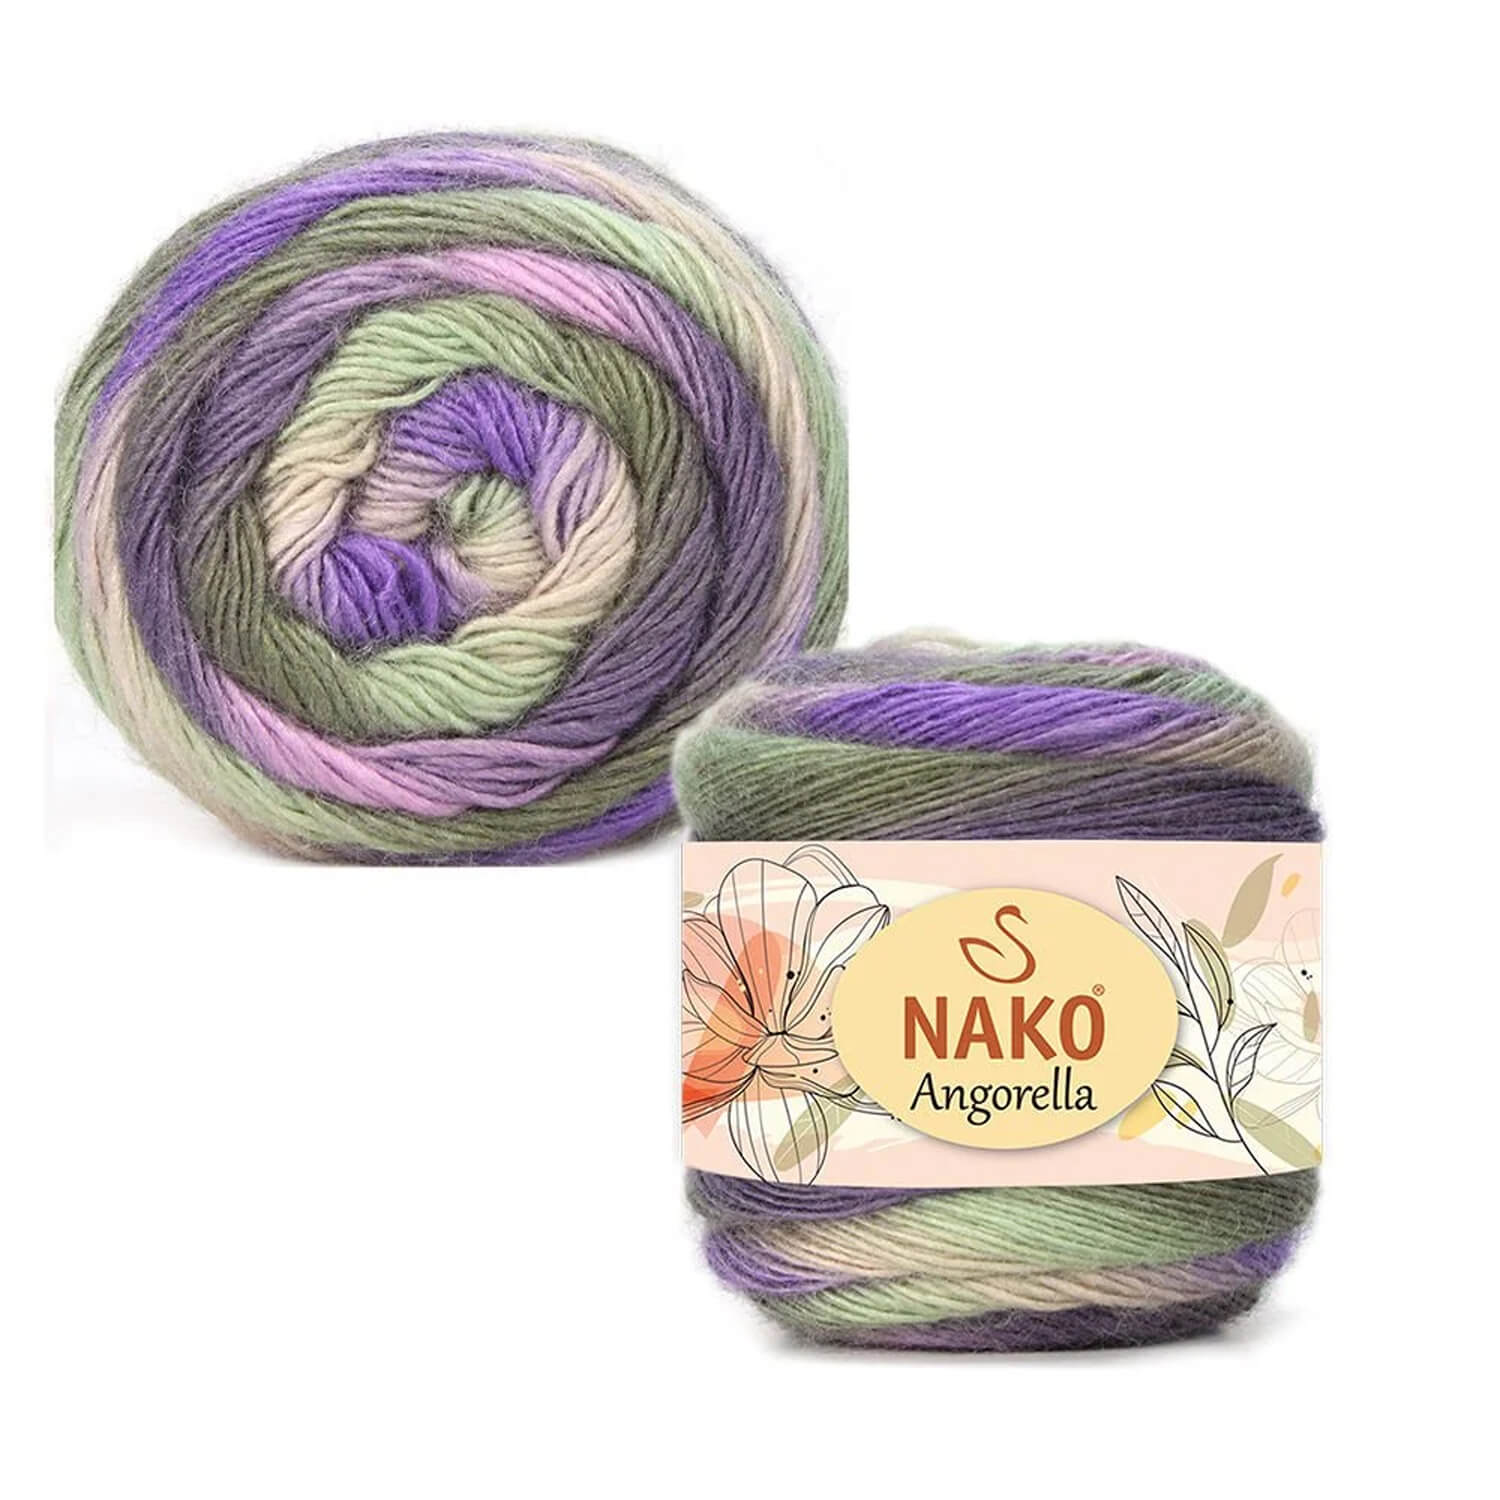 Nako Angorella Yarn - Multi-Color 87539